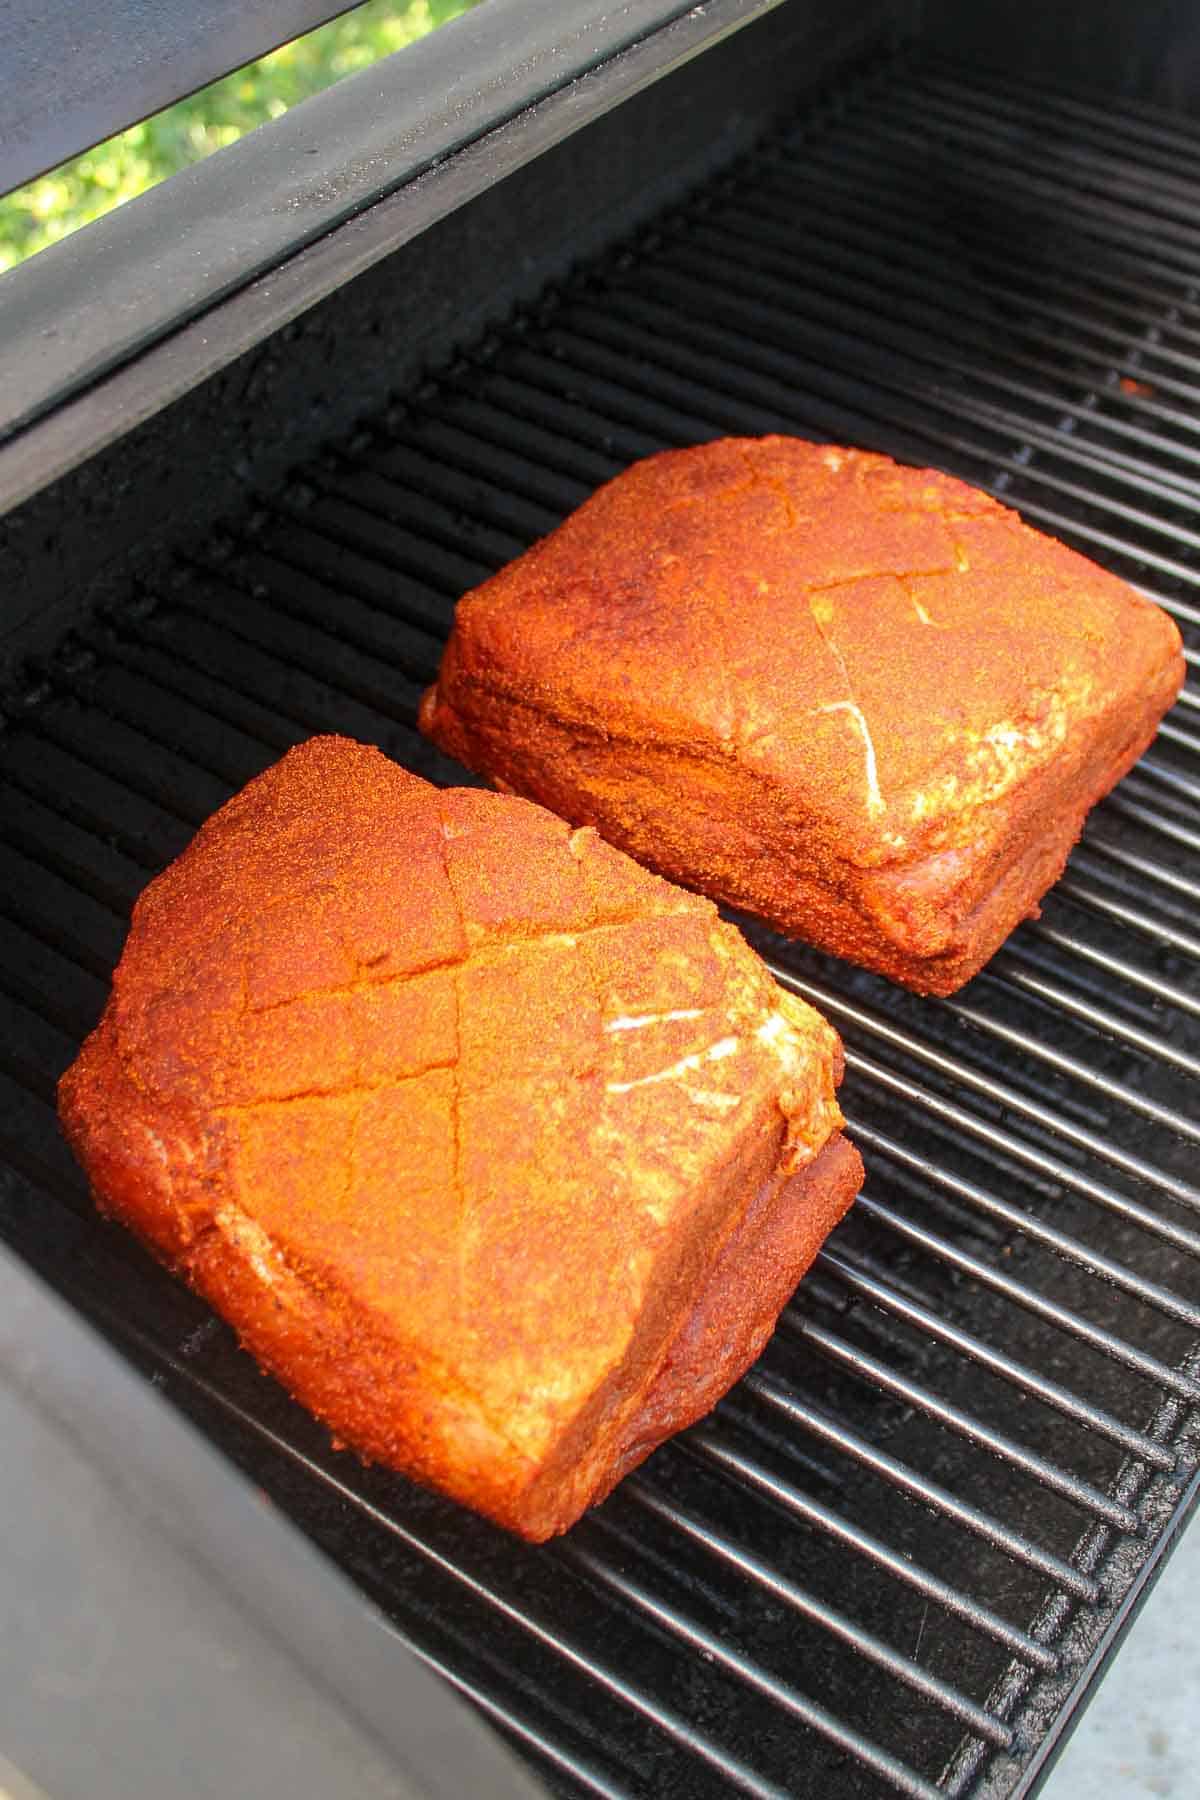 Seasoned pork butts on the smoker.